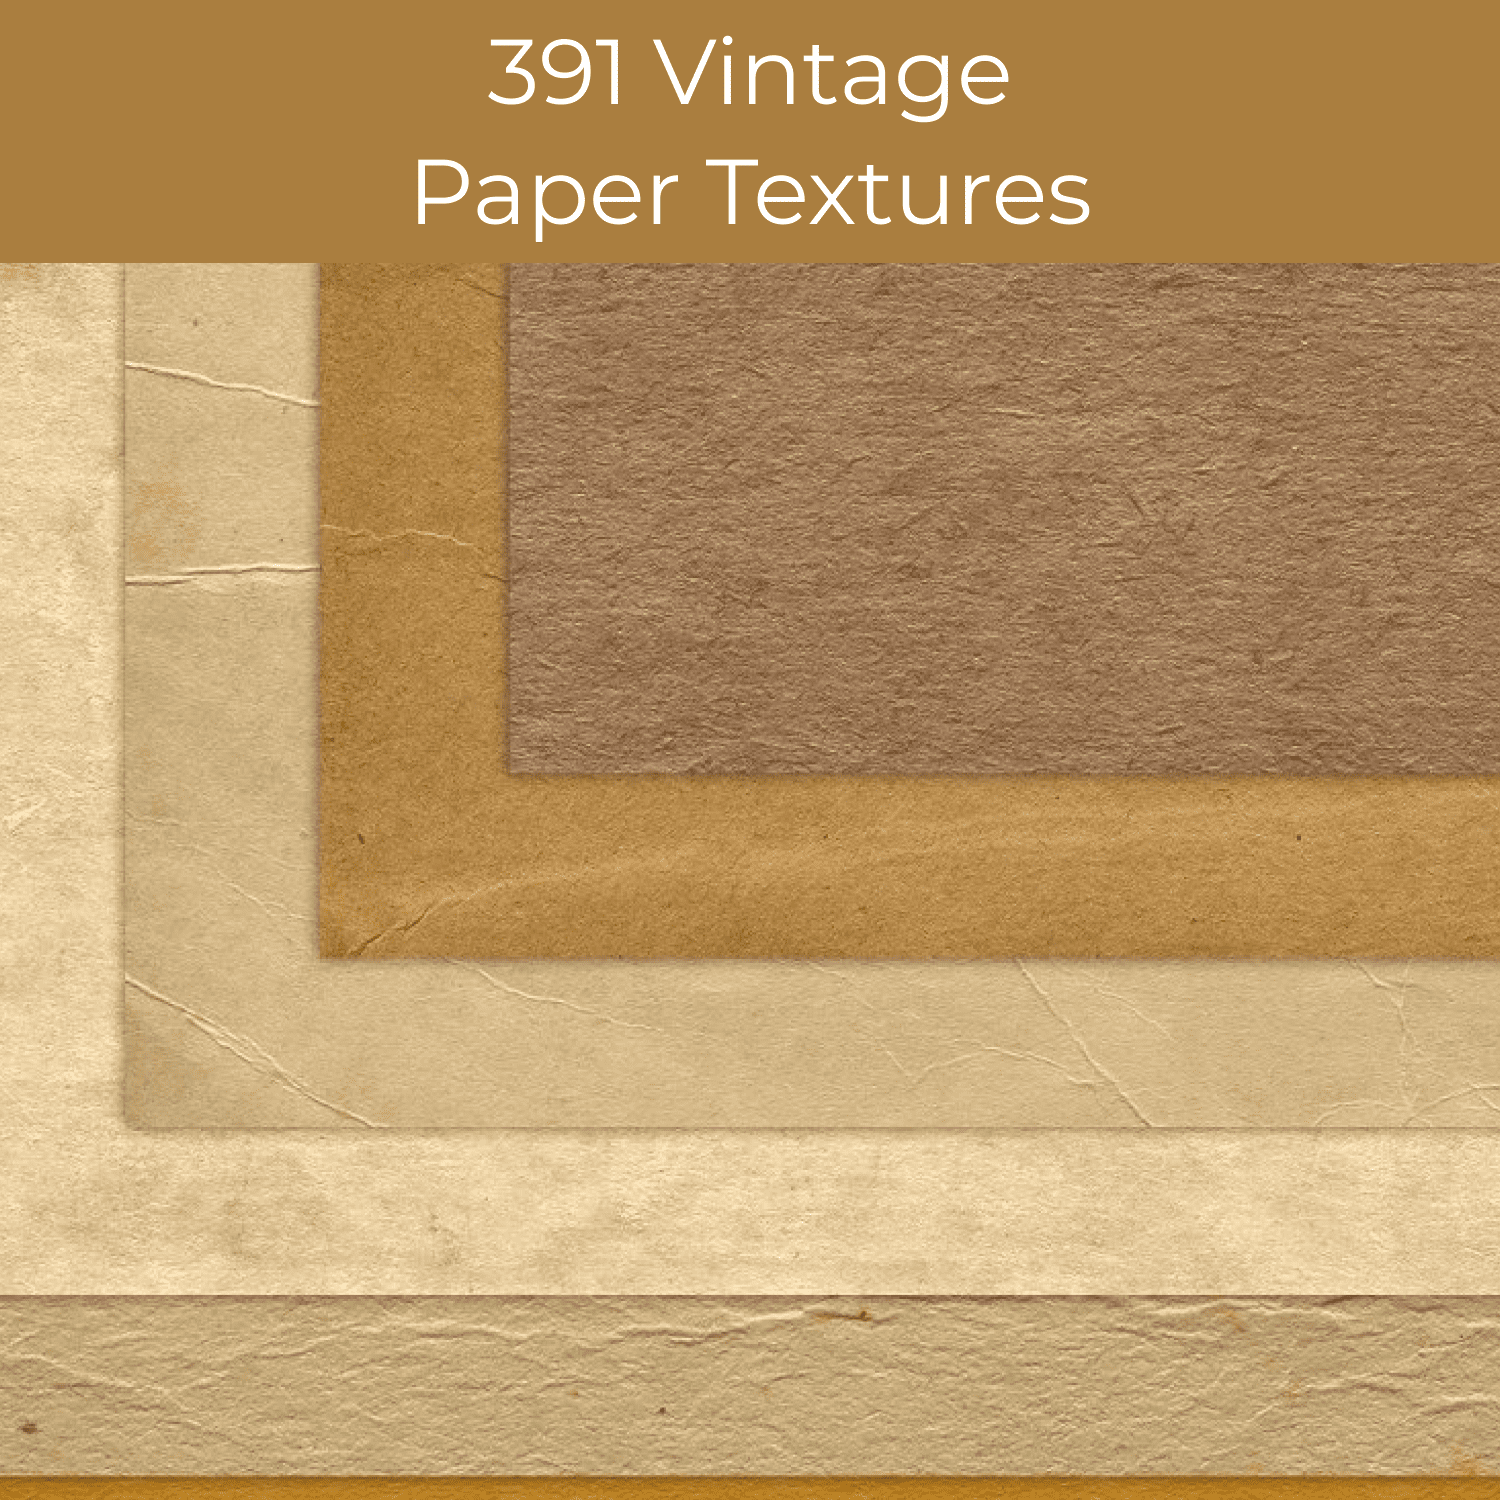 391 Vintage Paper Textures.